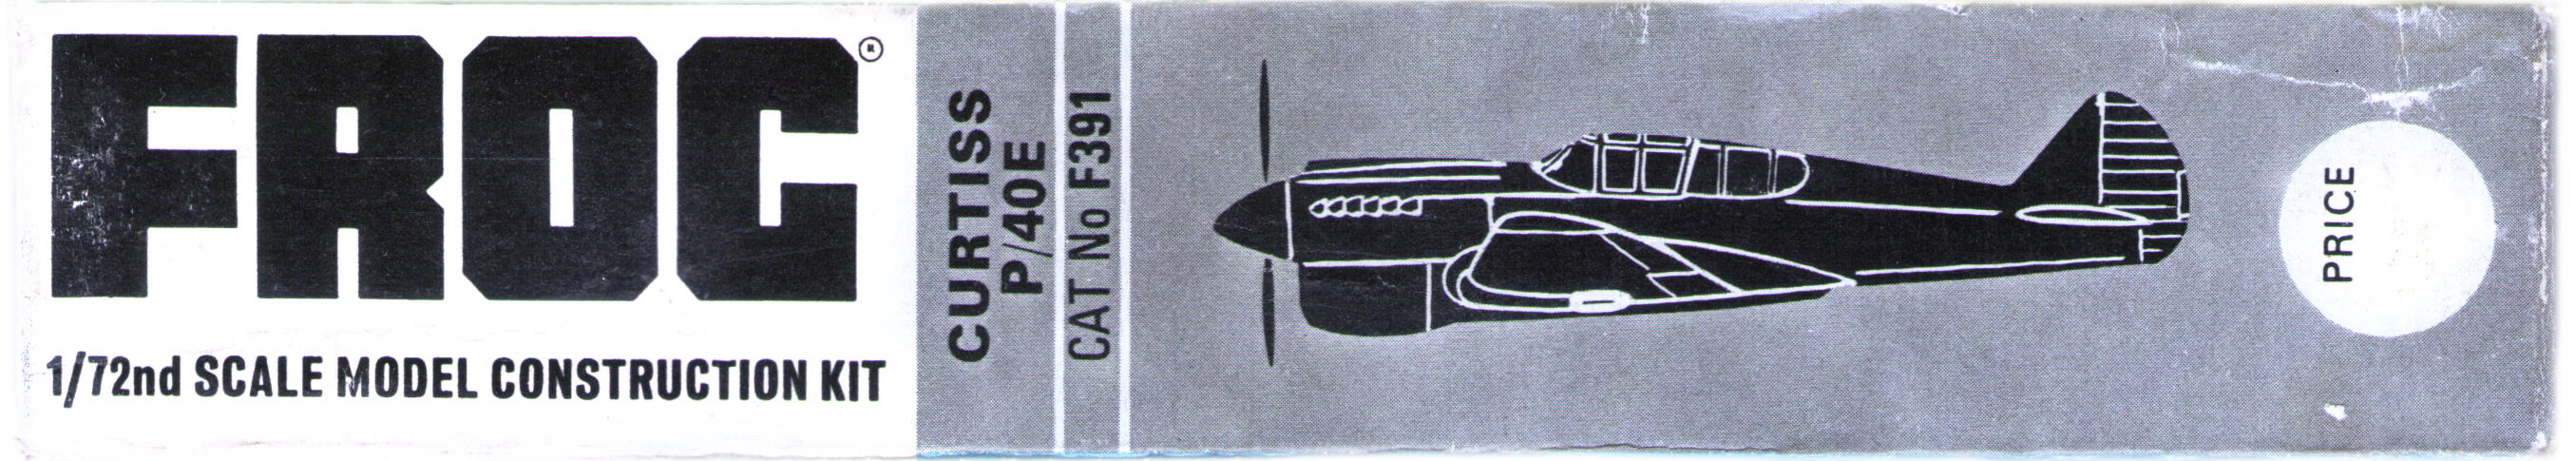 Сторона коробки  FROG F391 Curtiss P-40E Warhawk (Kittyhawk IA), Black series, Rovex Industries Ltd, 1966-67